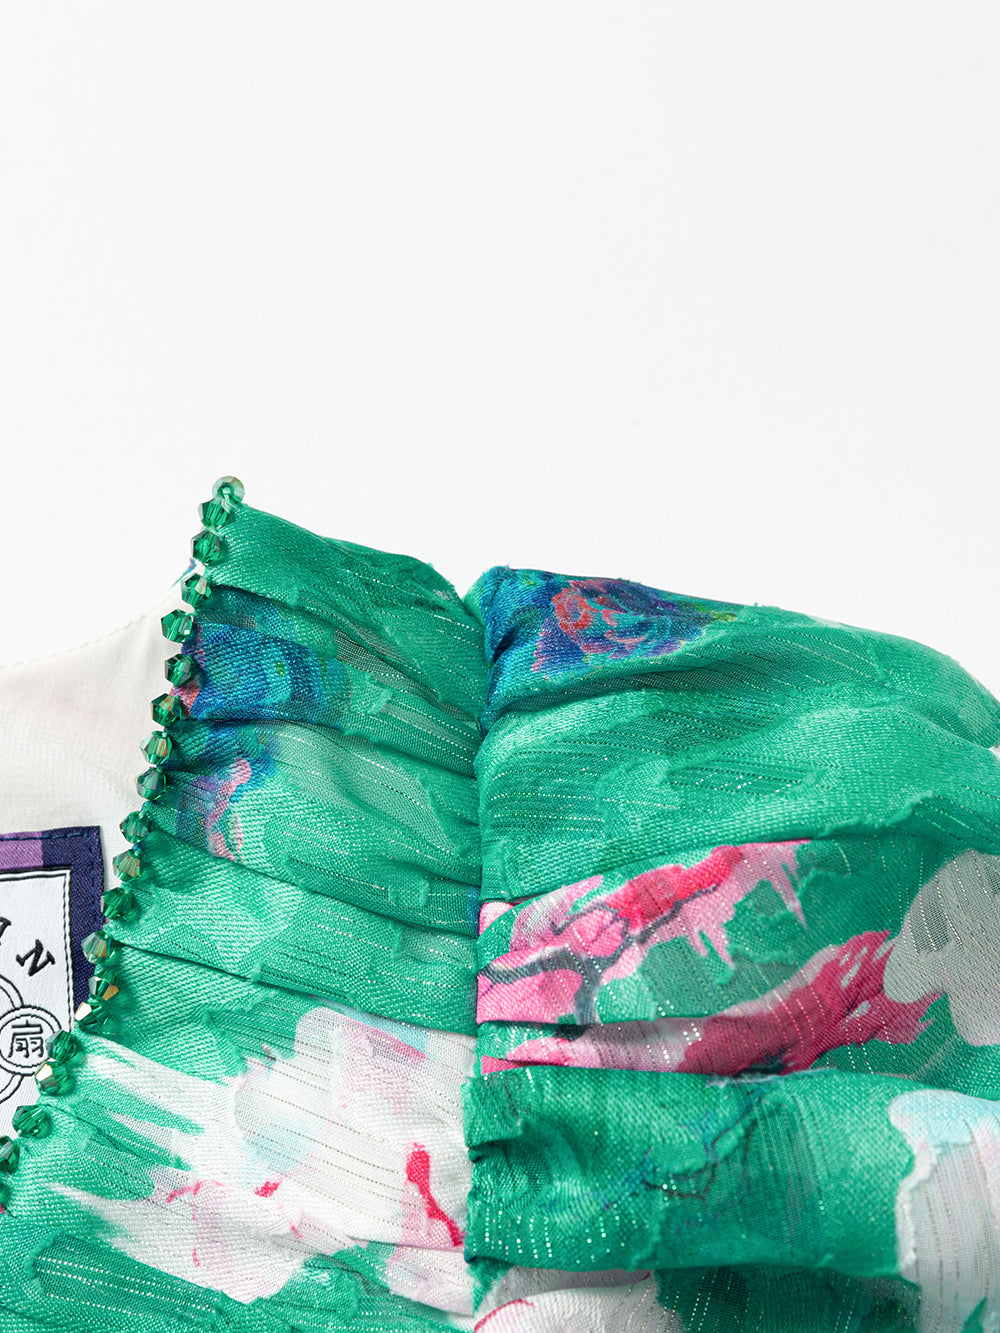 MUKZIN Jacquard Chiffon Breathable Comfortable V-neck Printed Green Dress